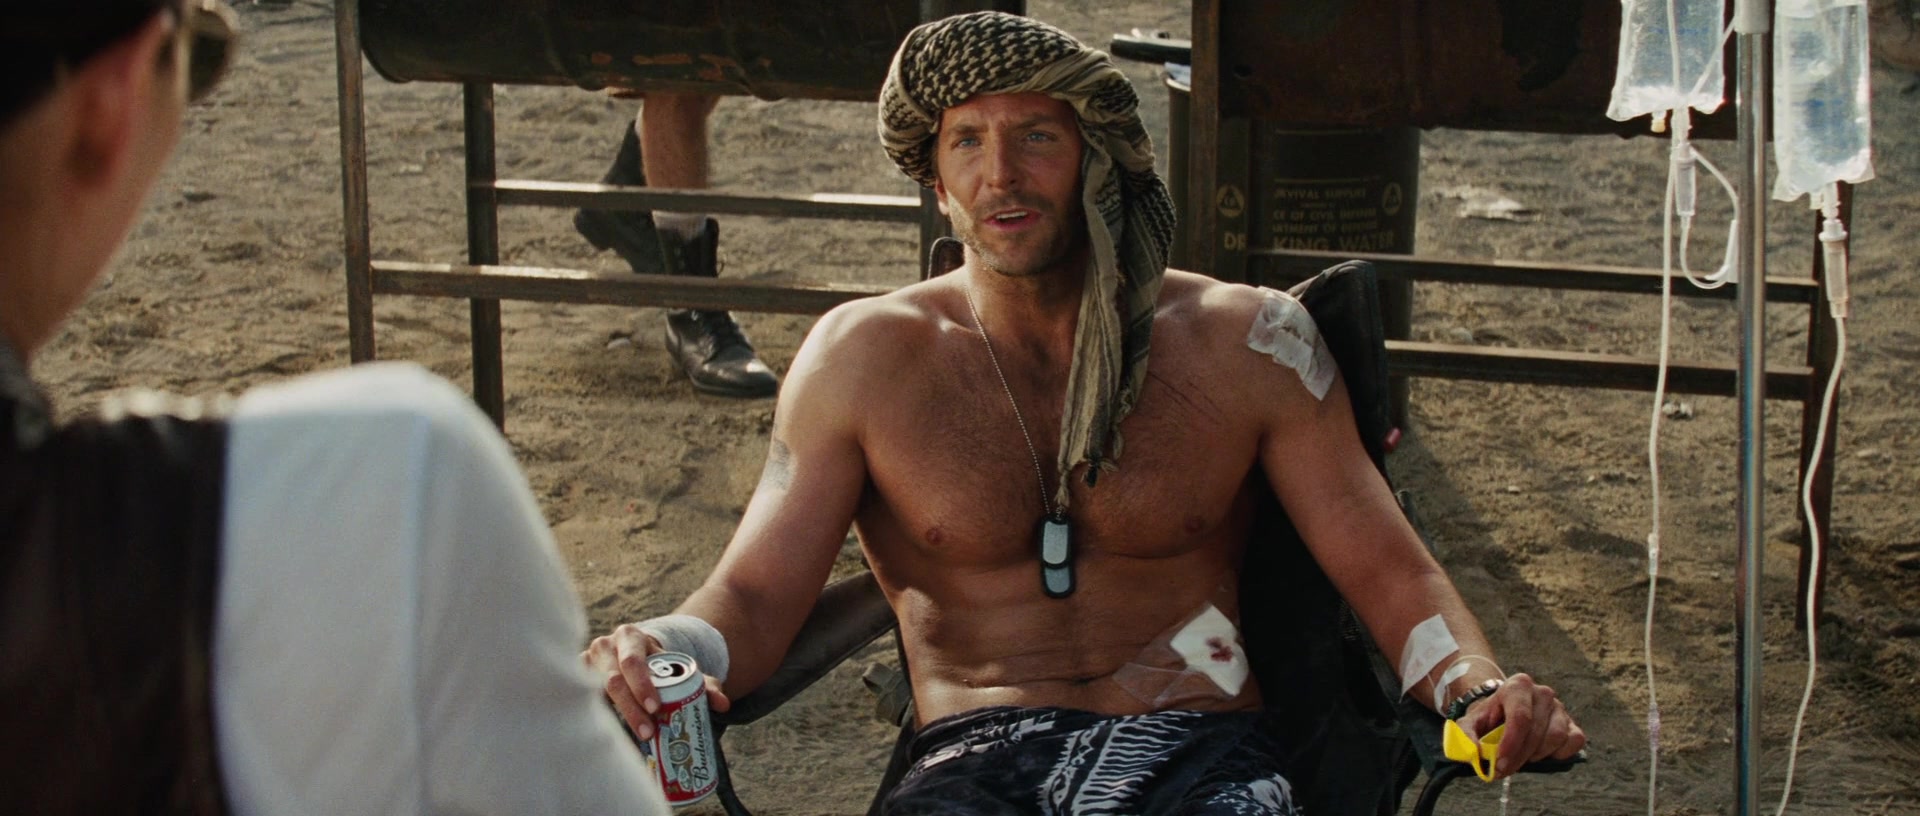 Budweiser Beer Drunk by Bradley Cooper in The A-Team (2010) Movie